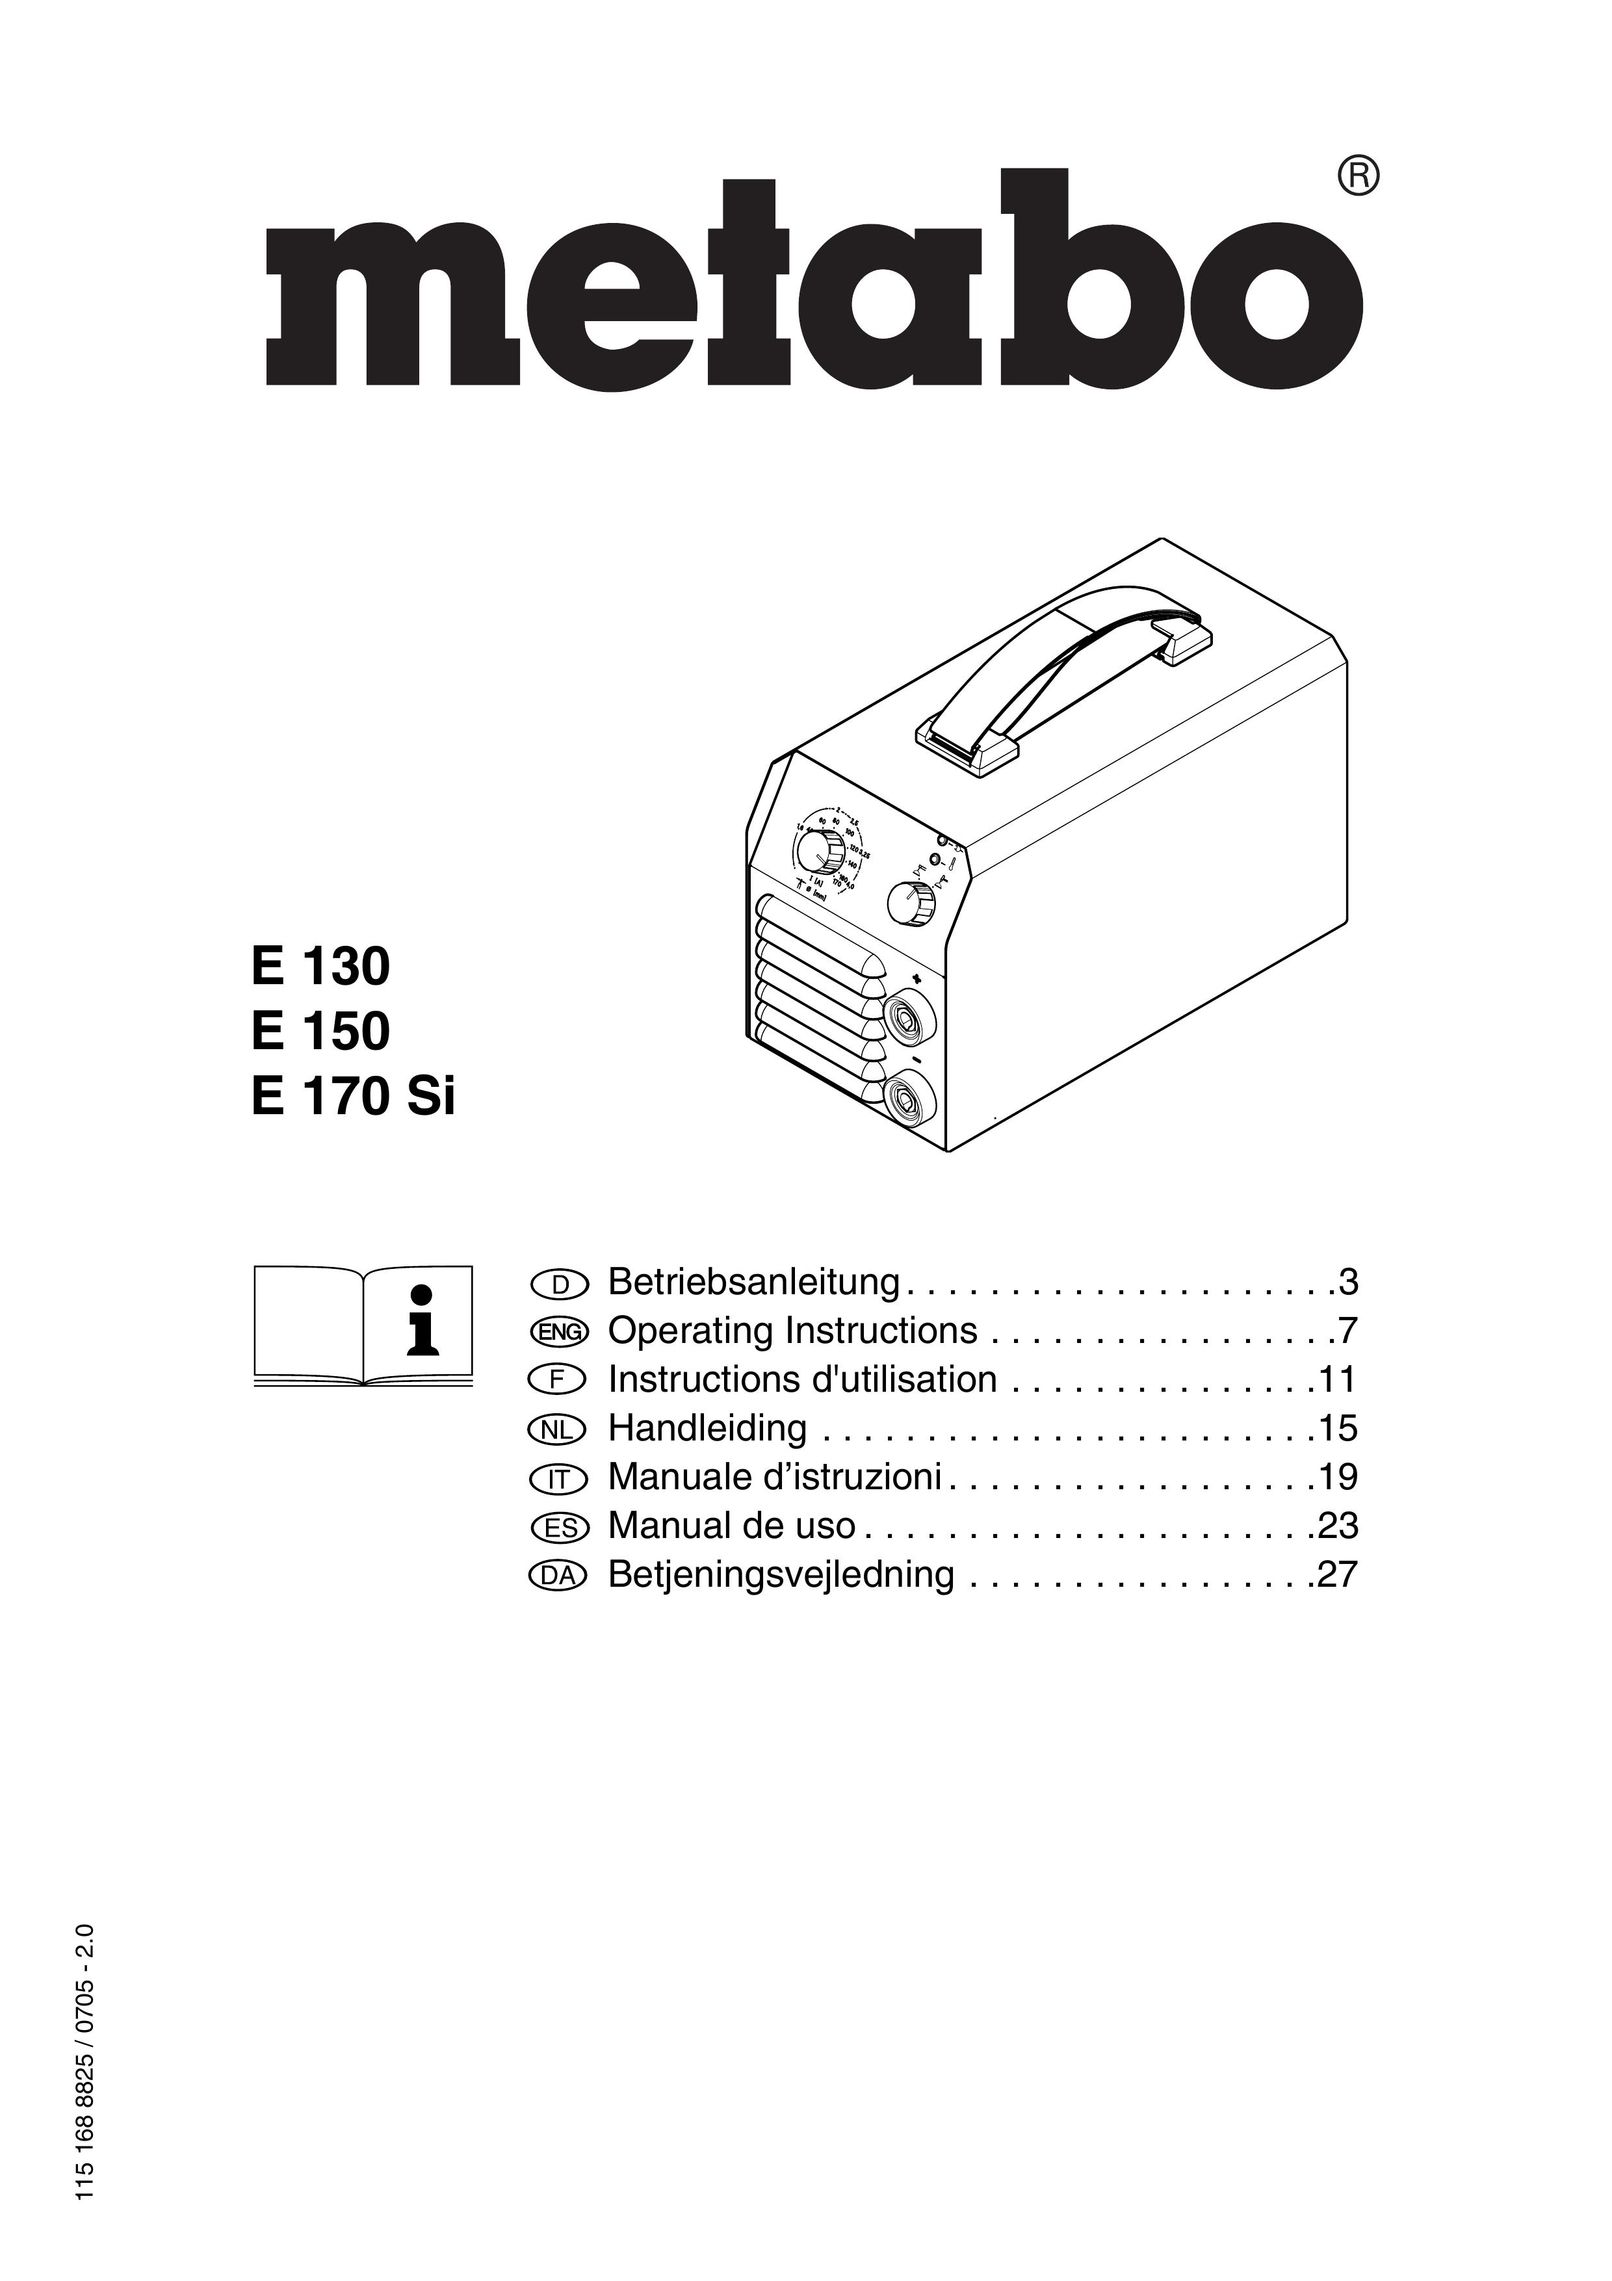 Metabo E 170 Si Welding System User Manual